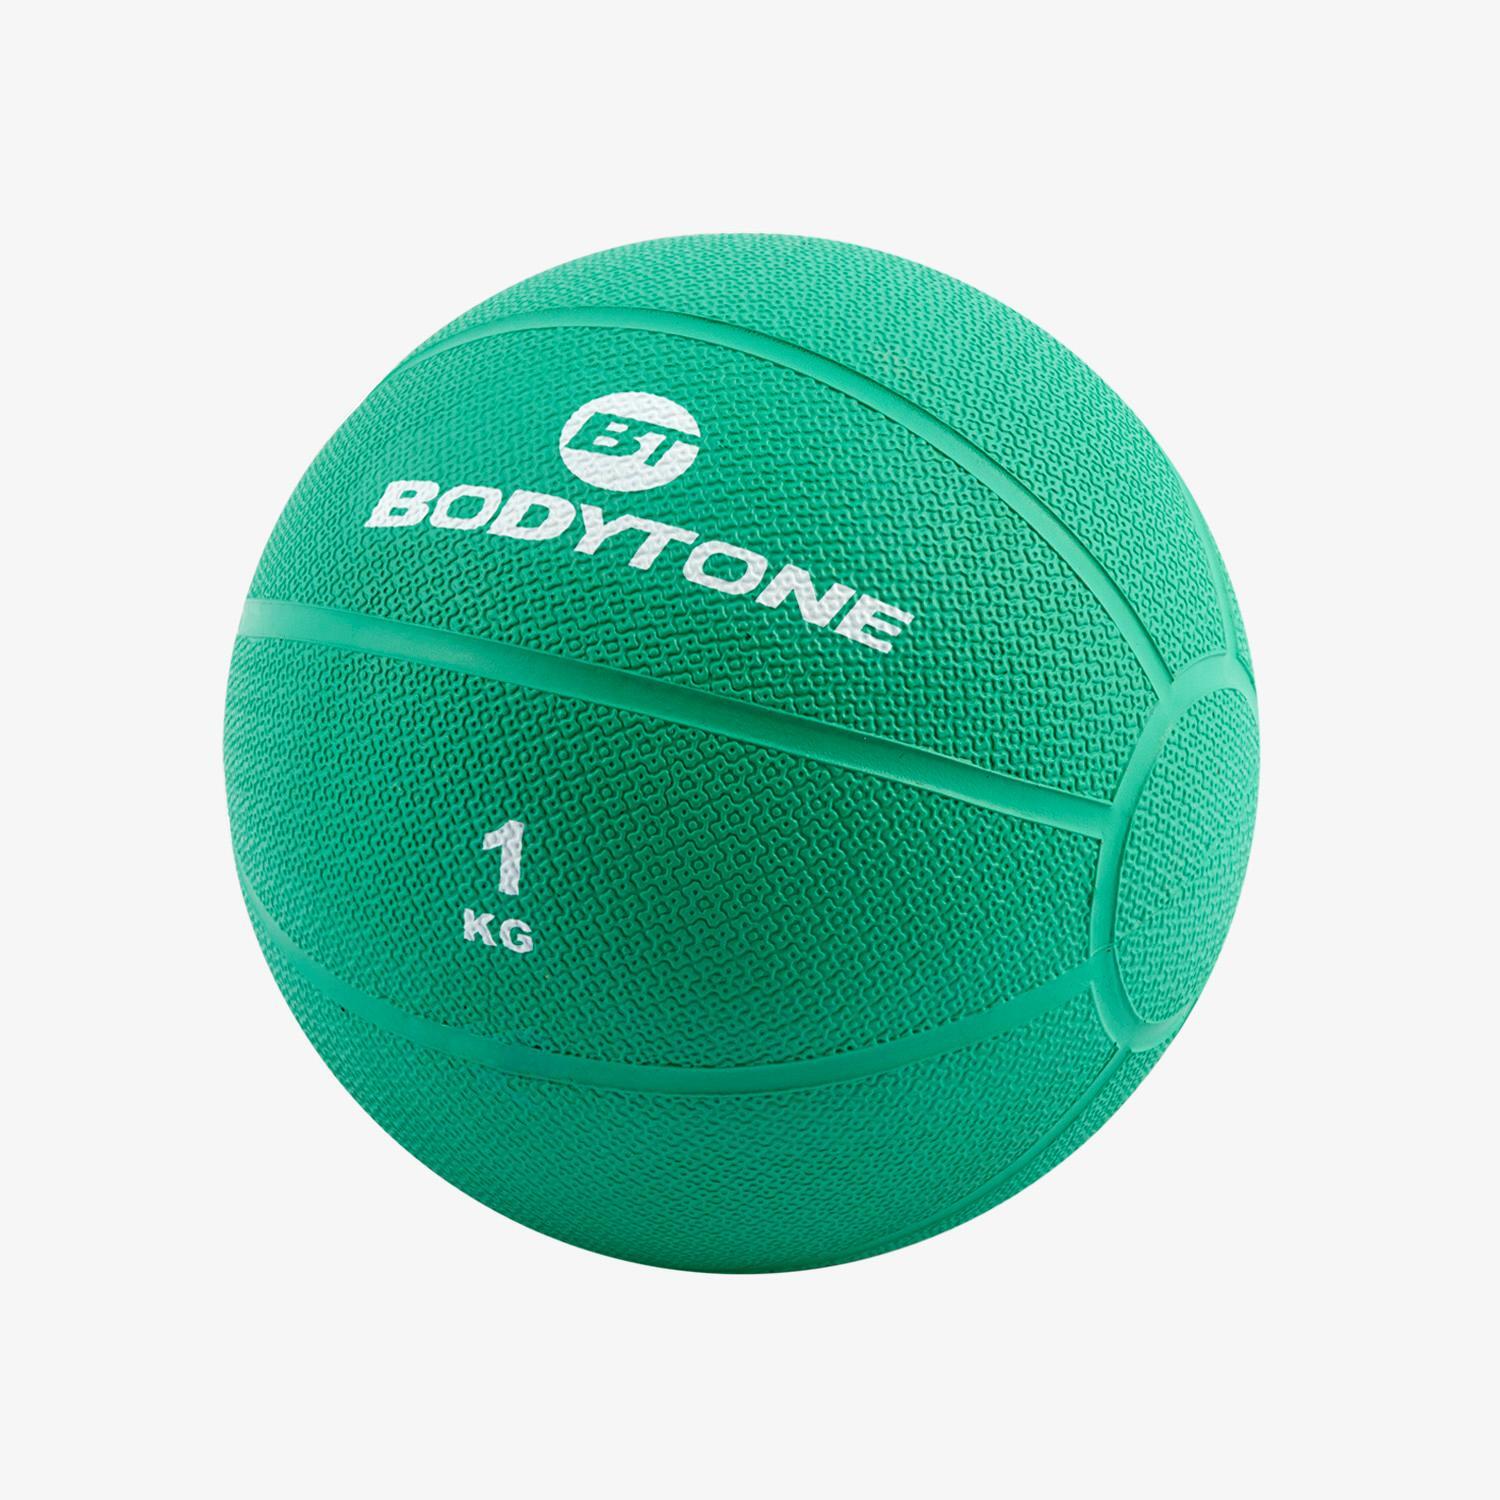 Ballon Médicinal 1 Kg Bodytone - Vert - Soft Wall sports MKP taille UNICA